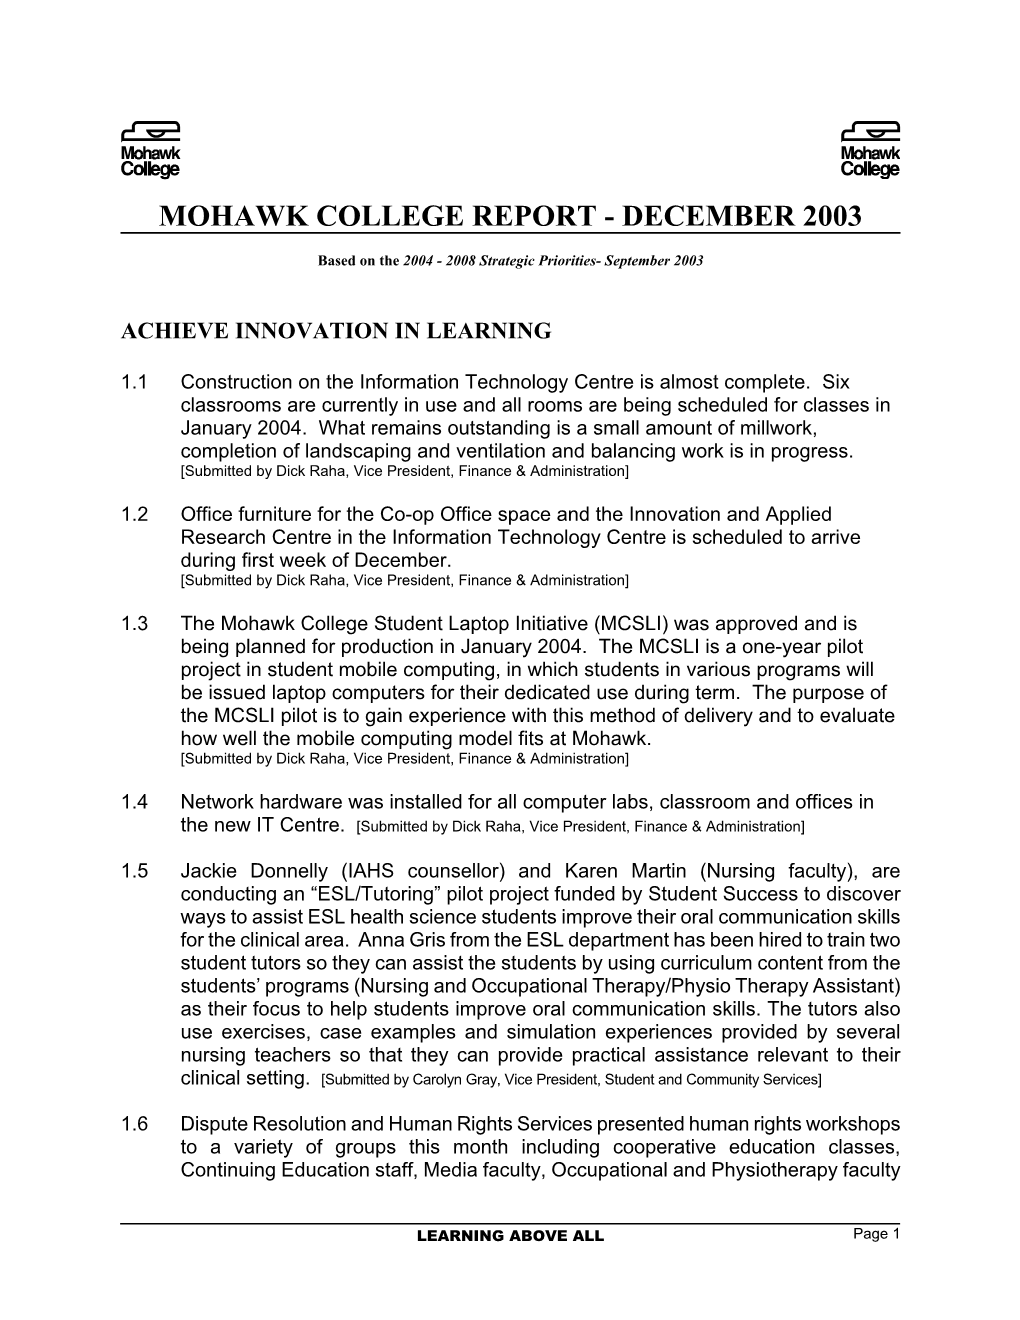 Mohawk College Report - December 2003